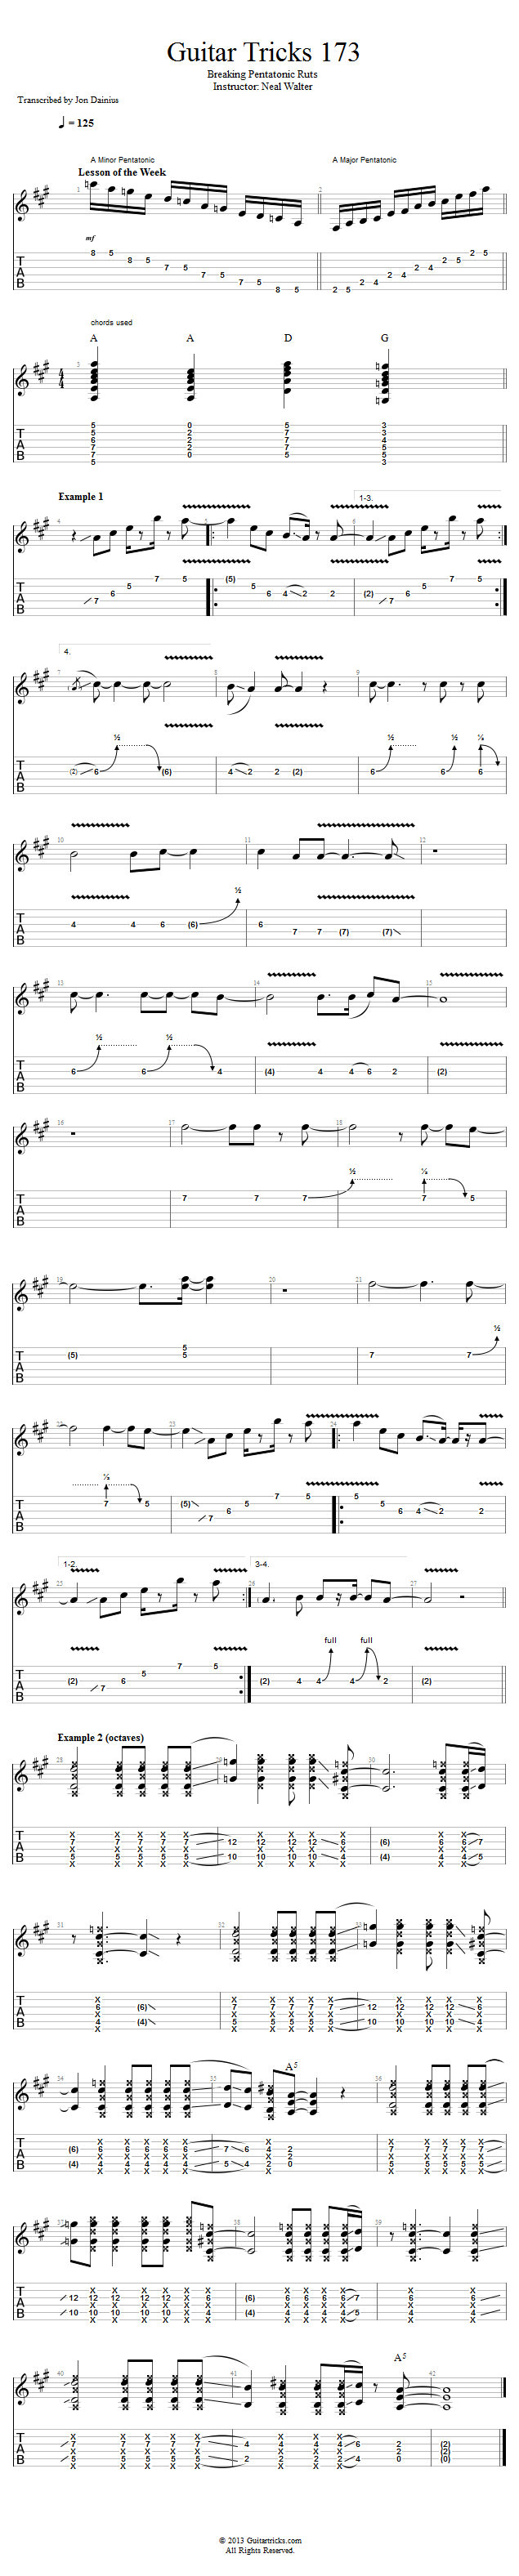 Guitar Tricks 173: Breaking Pentatonic Ruts  song notation